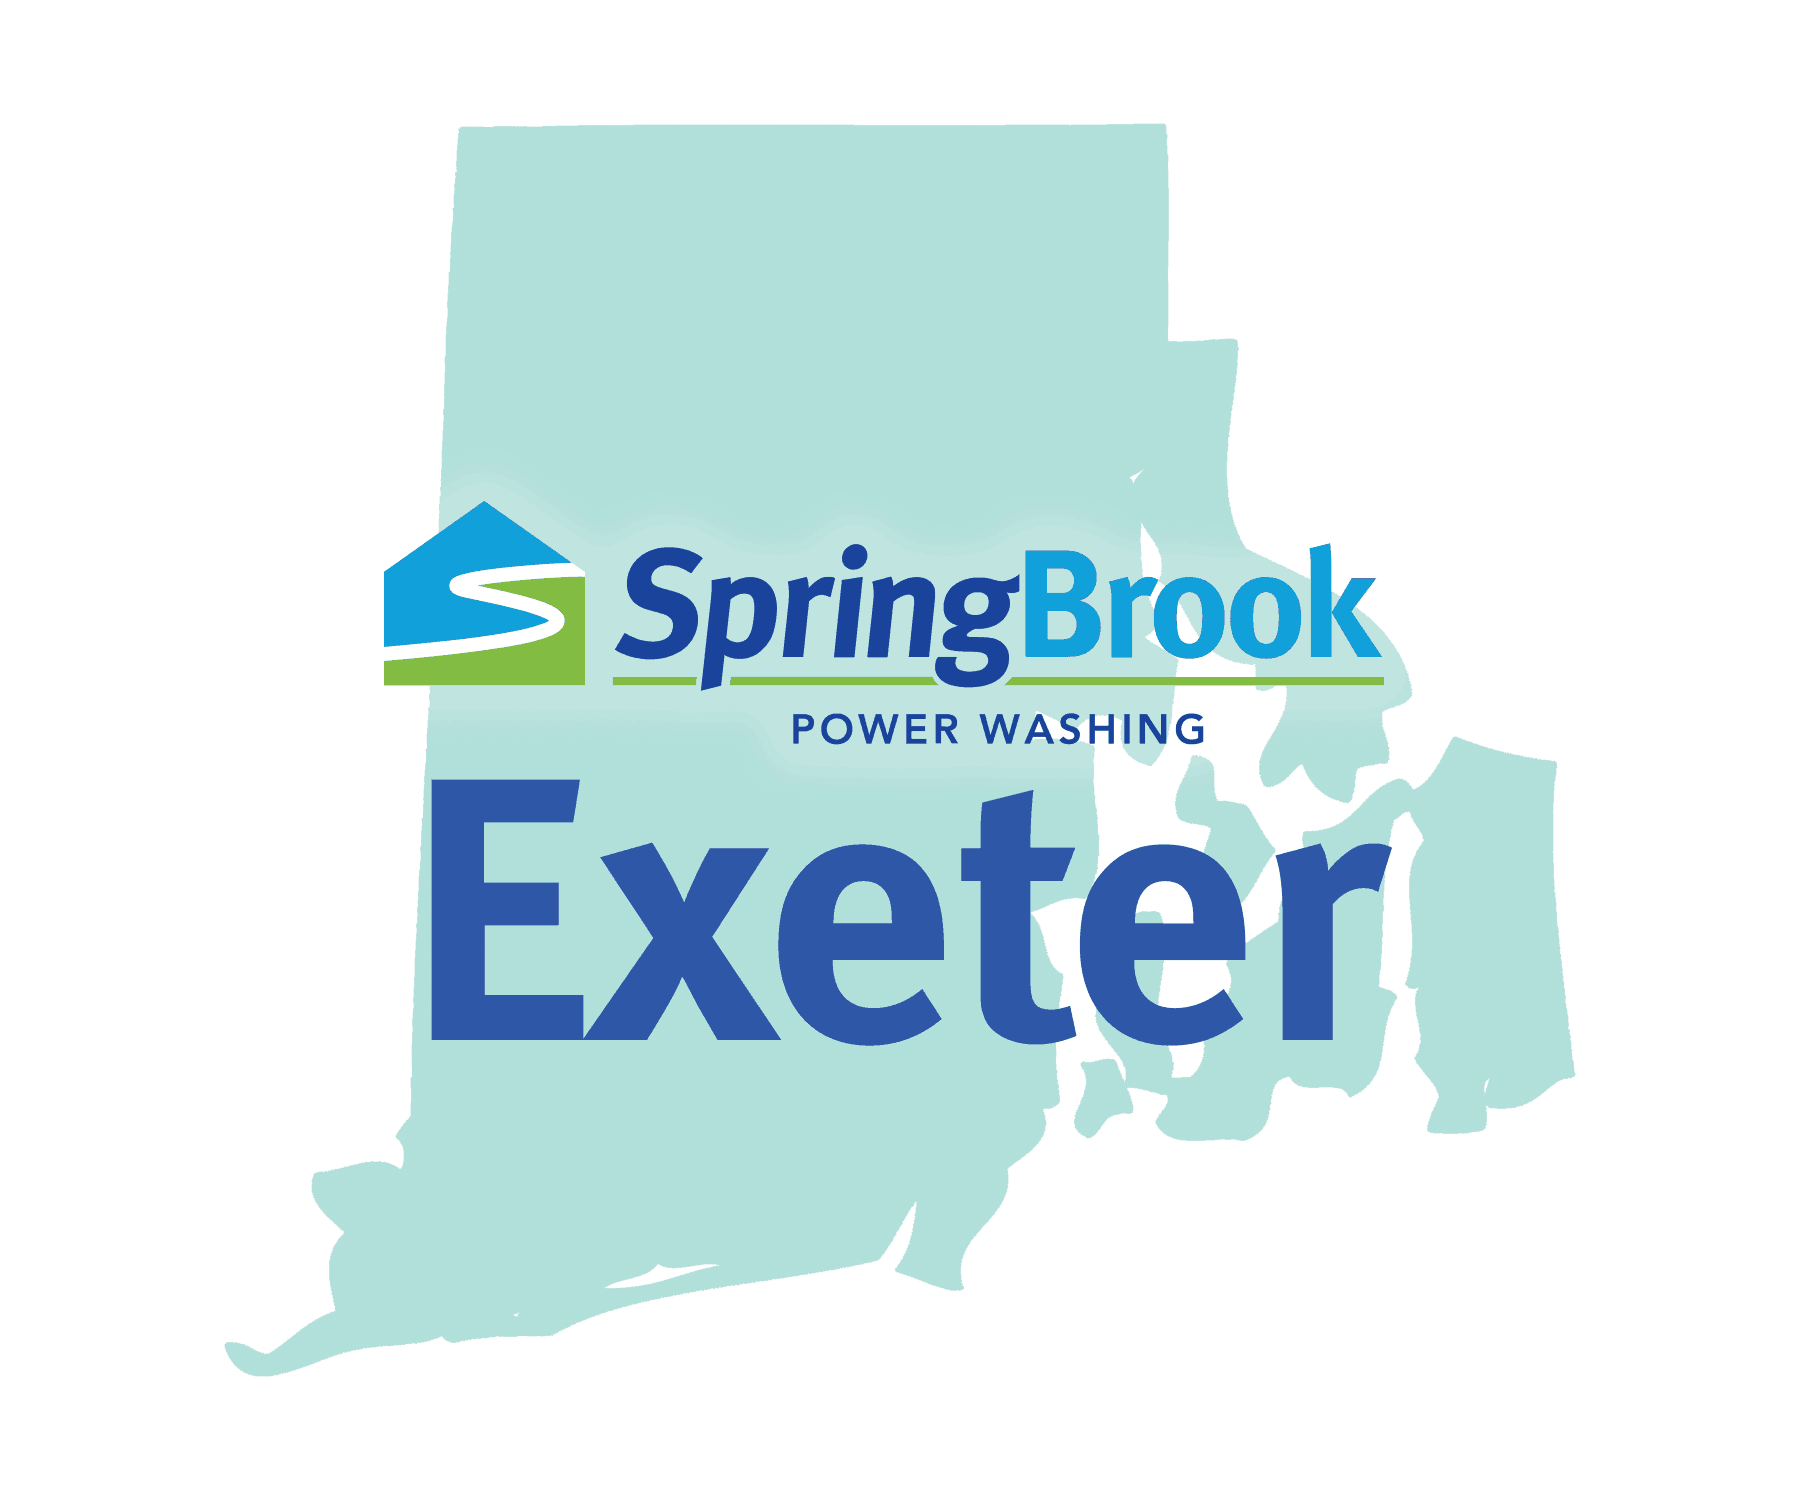 Springbrook Power Washing Exeter Rhode Island